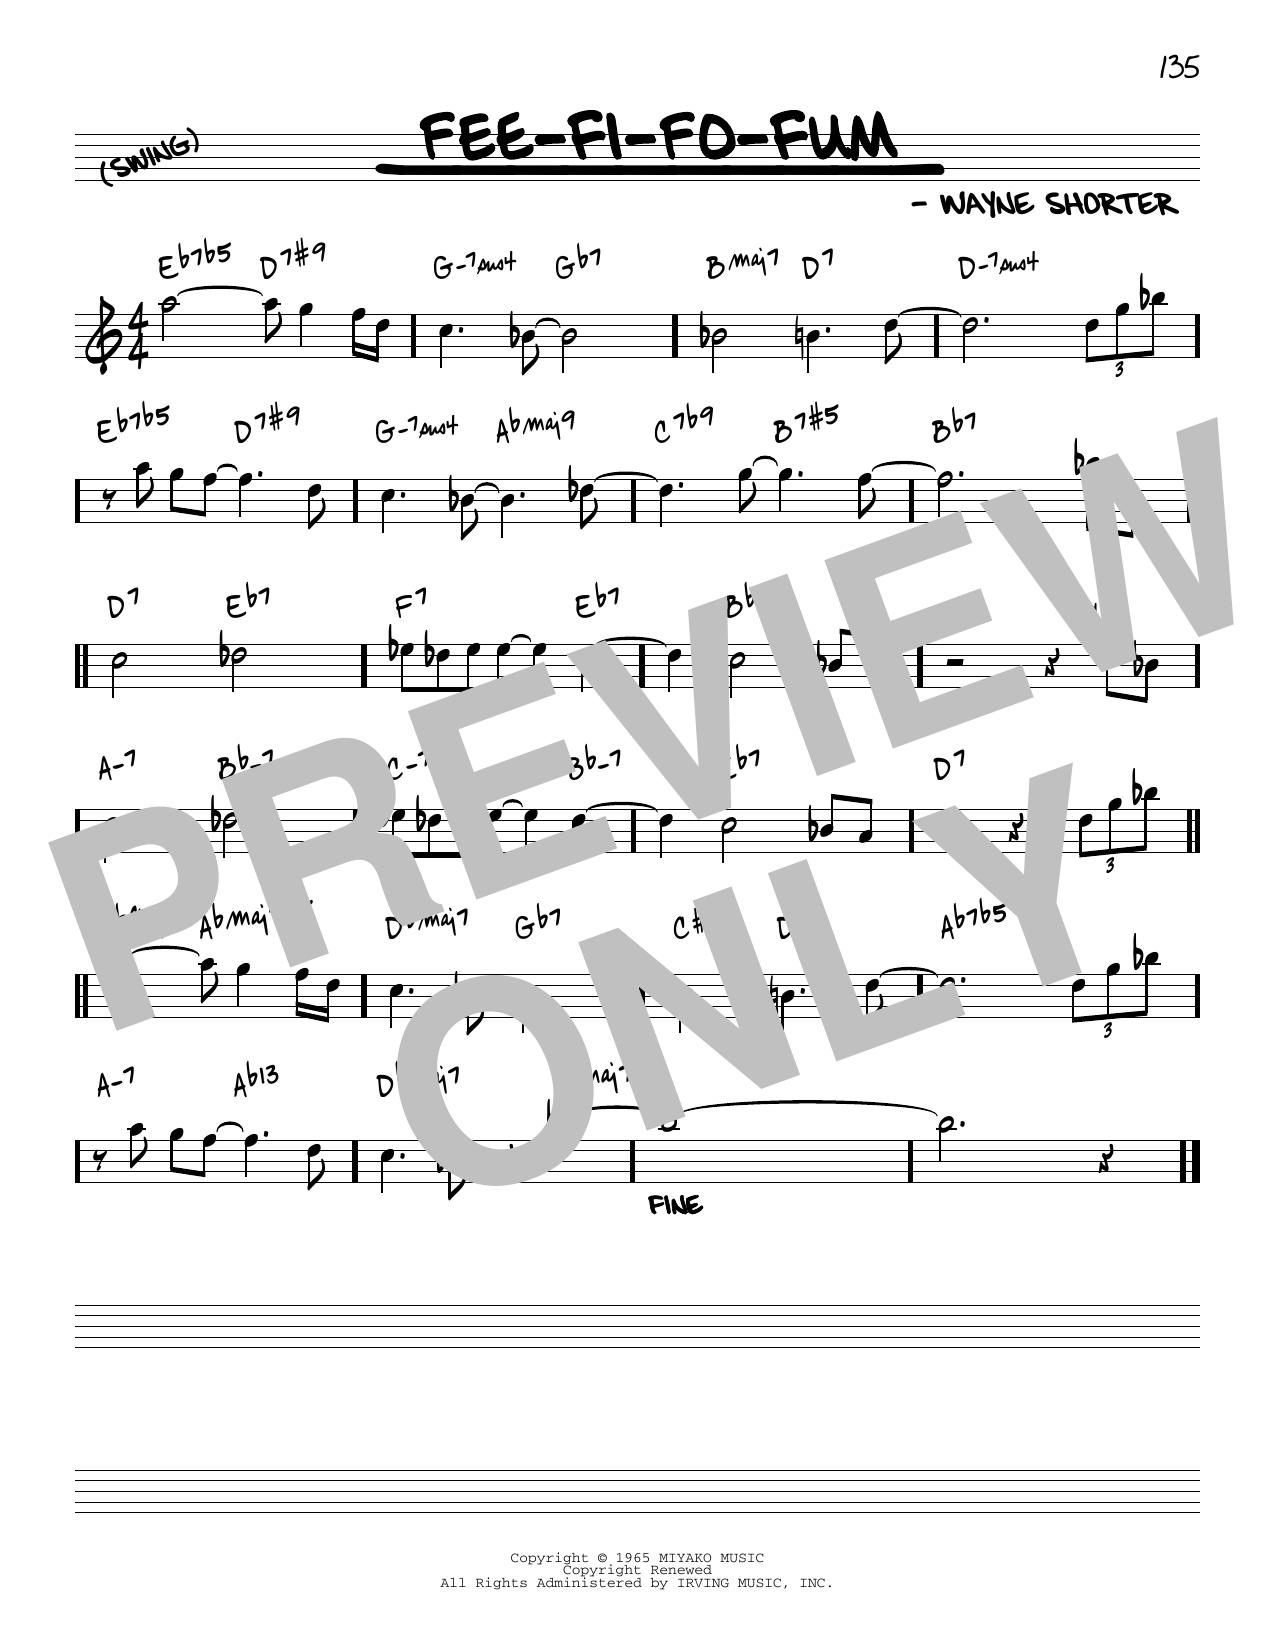 Wayne Shorter Fee-Fi-Fo-Fum [Reharmonized version] (arr. Jack Grassel) Sheet Music Notes & Chords for Real Book – Melody & Chords - Download or Print PDF